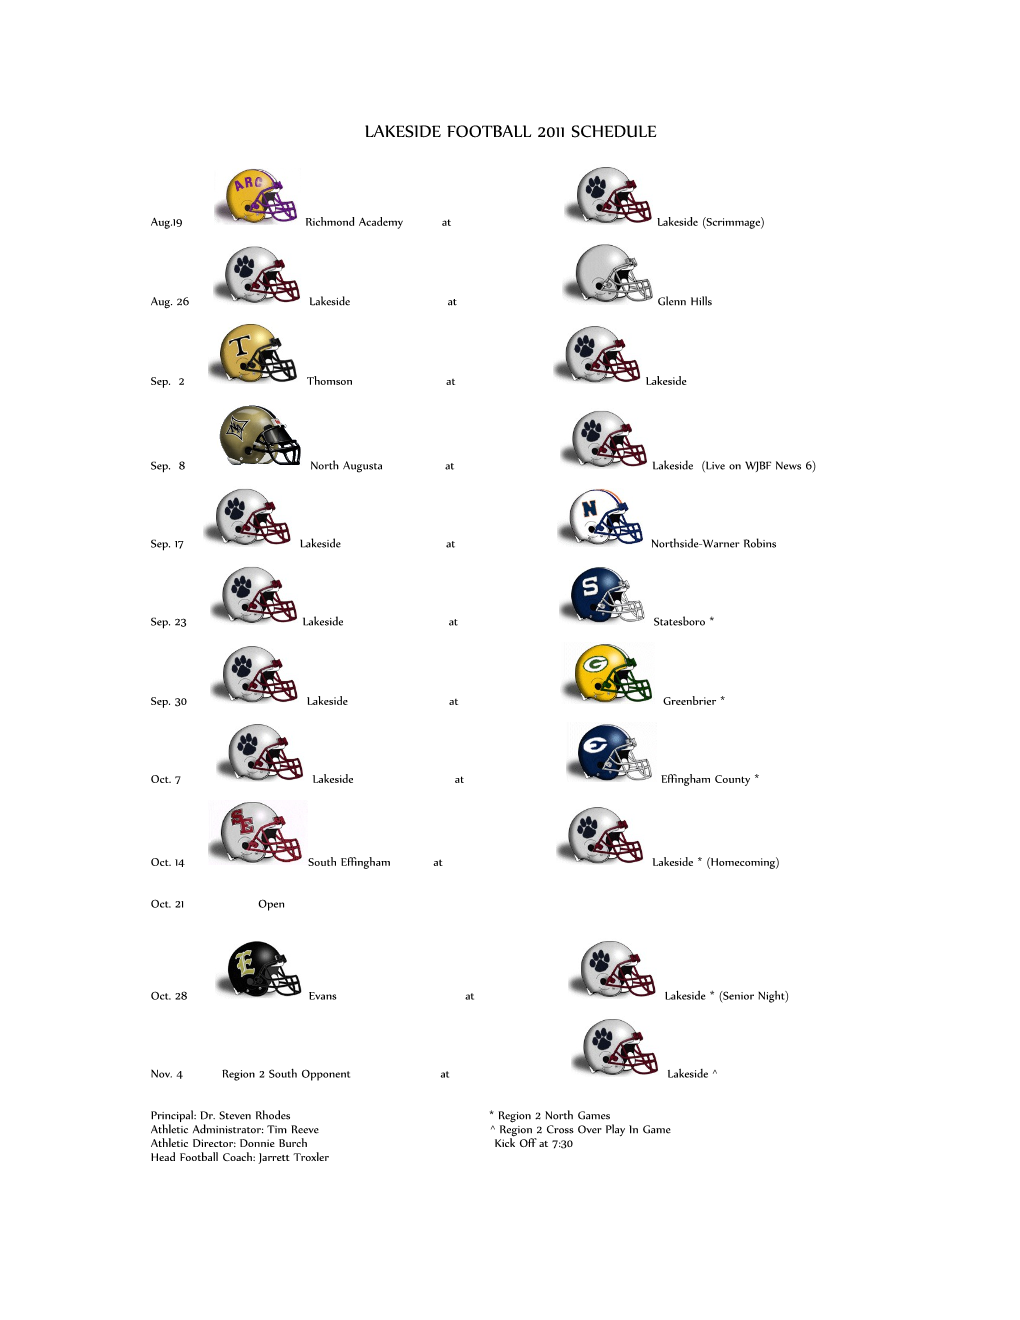 Lakeside Football 2011 Schedule